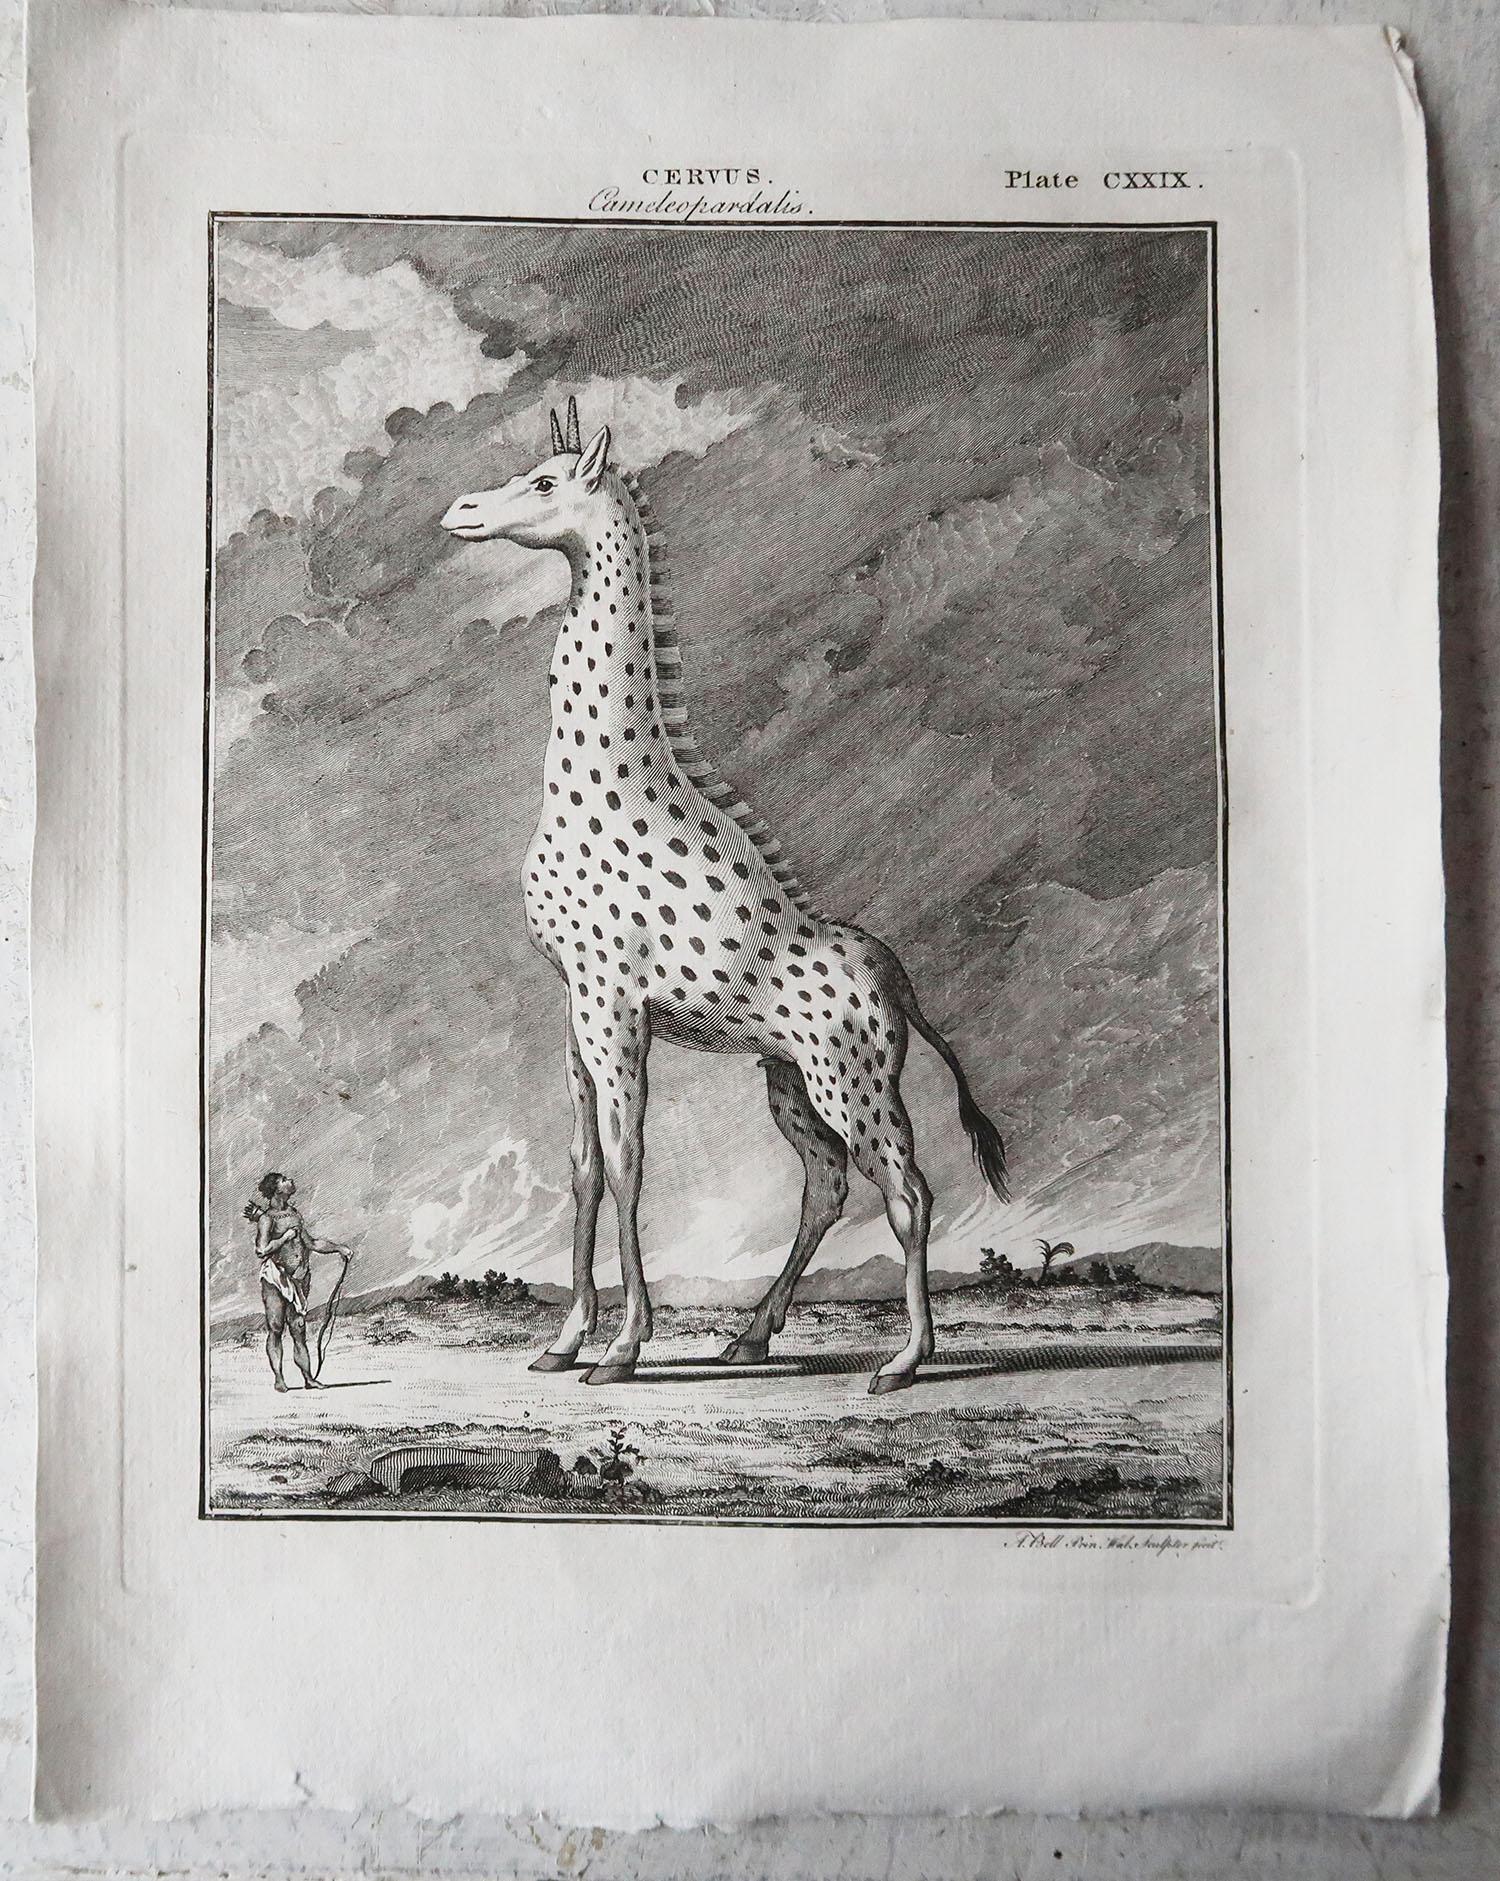 English Original Antique Print of A Giraffe, Circa 1790